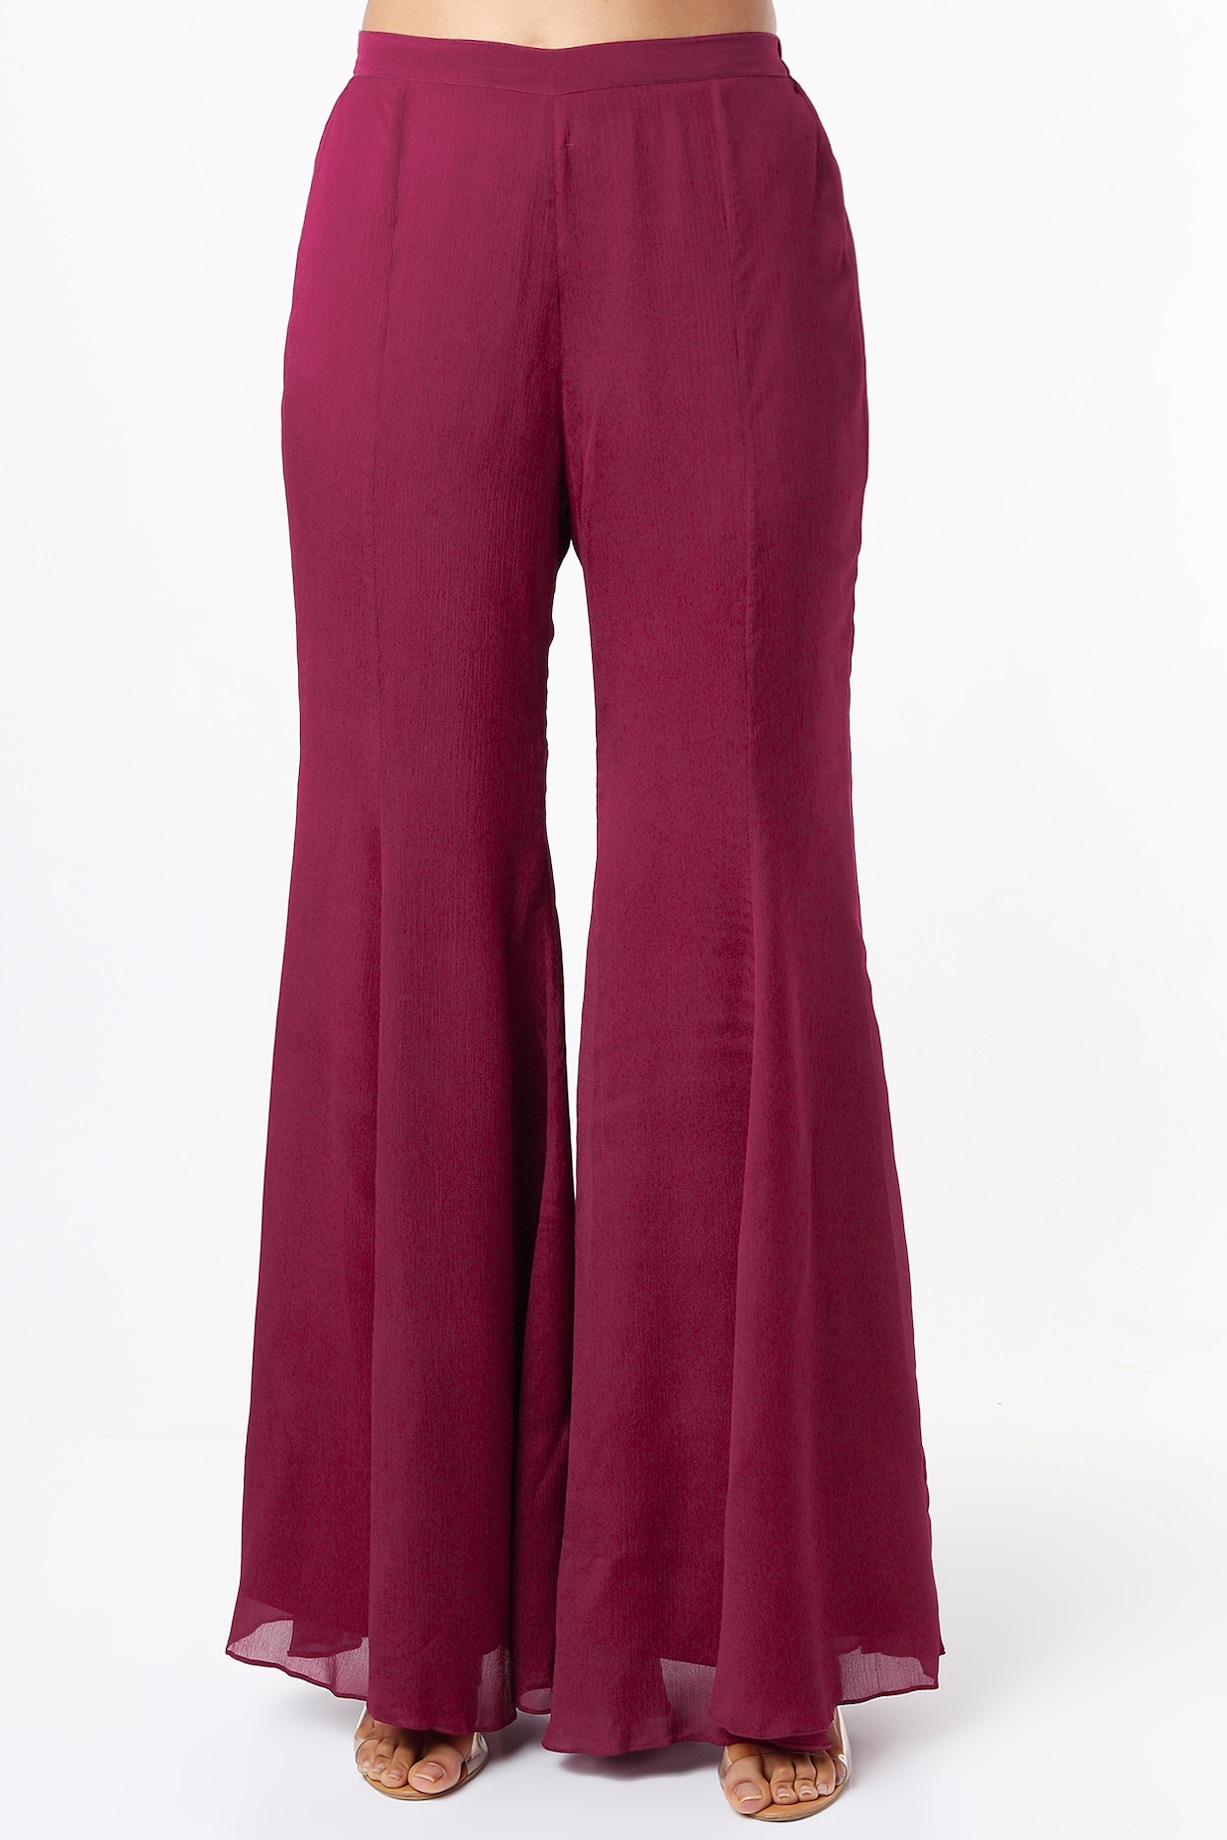 Burgundy Chiffon Bell Bottom Pant Set Design by Sneha Parekh at Pernia's  Pop Up Shop 2024